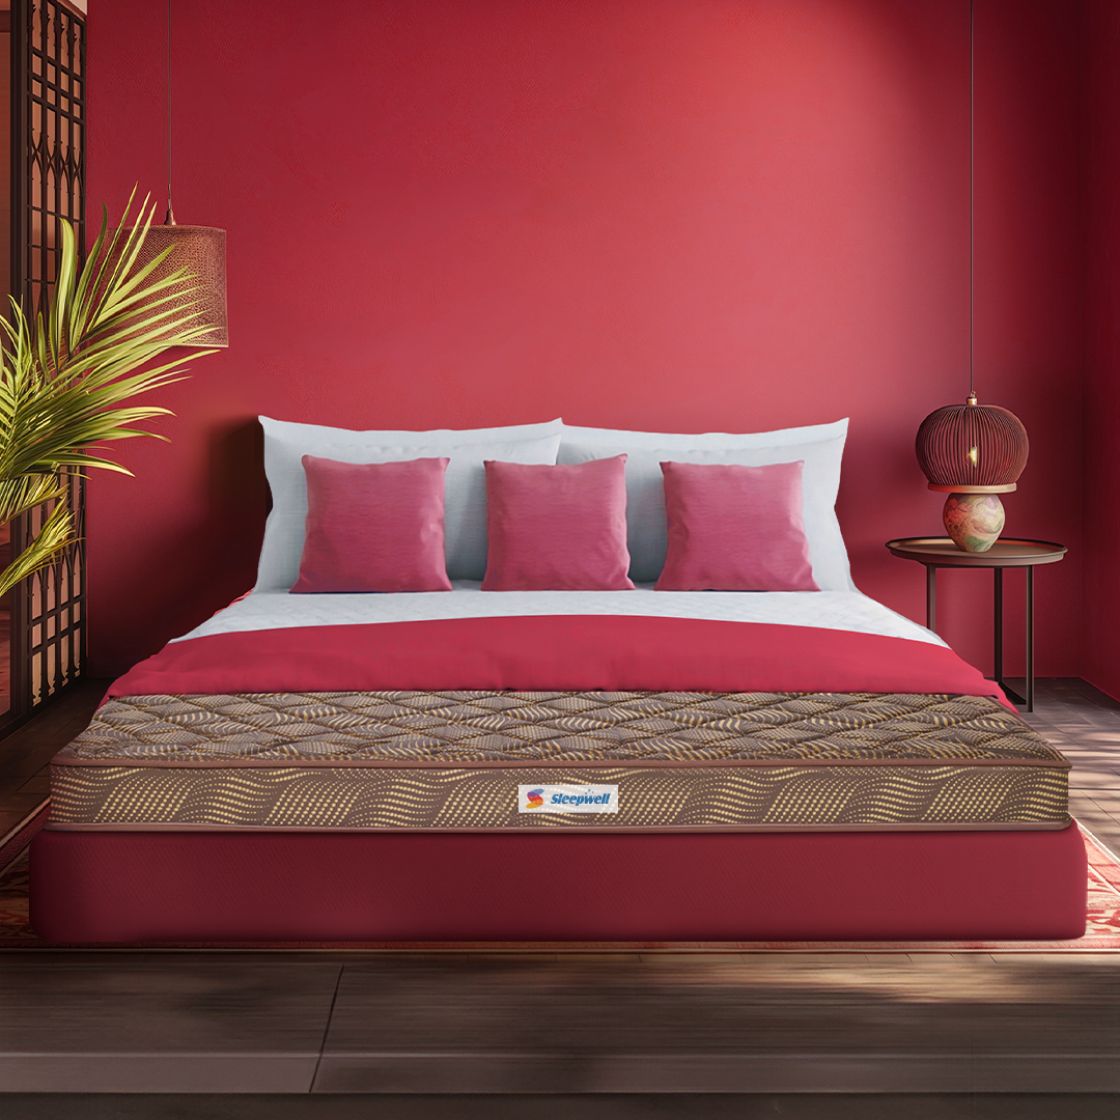 Sleepwell  Champ-Superior PU Foam | 5-inch Queen Bed Size | Medium Firm | Anti Sag Tech Mattress (Brown, 75x48x5)